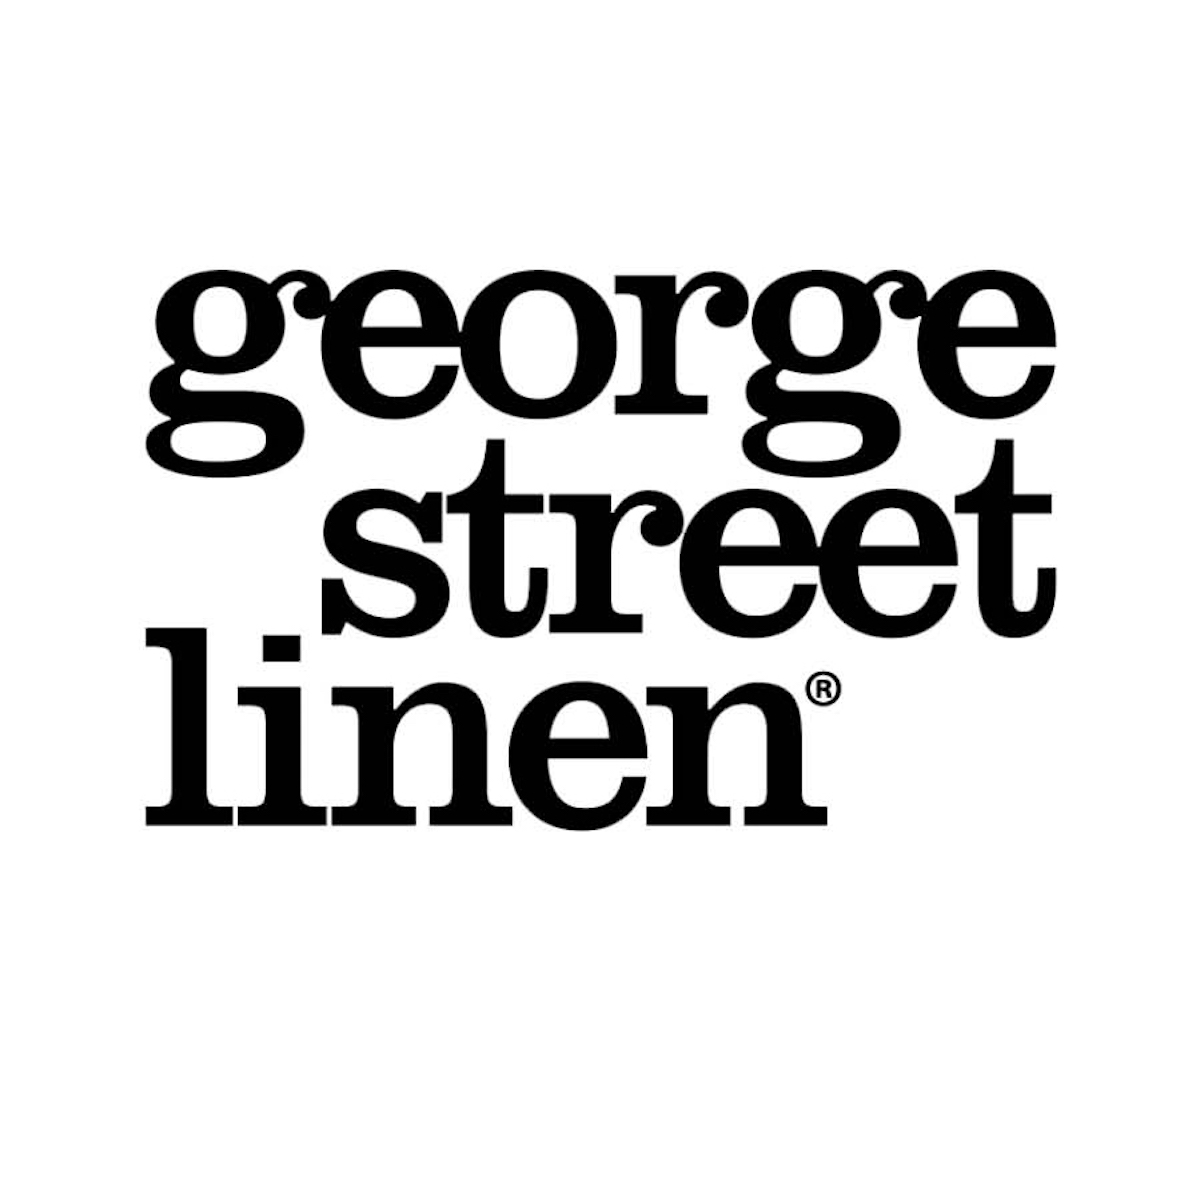 George Street Linen